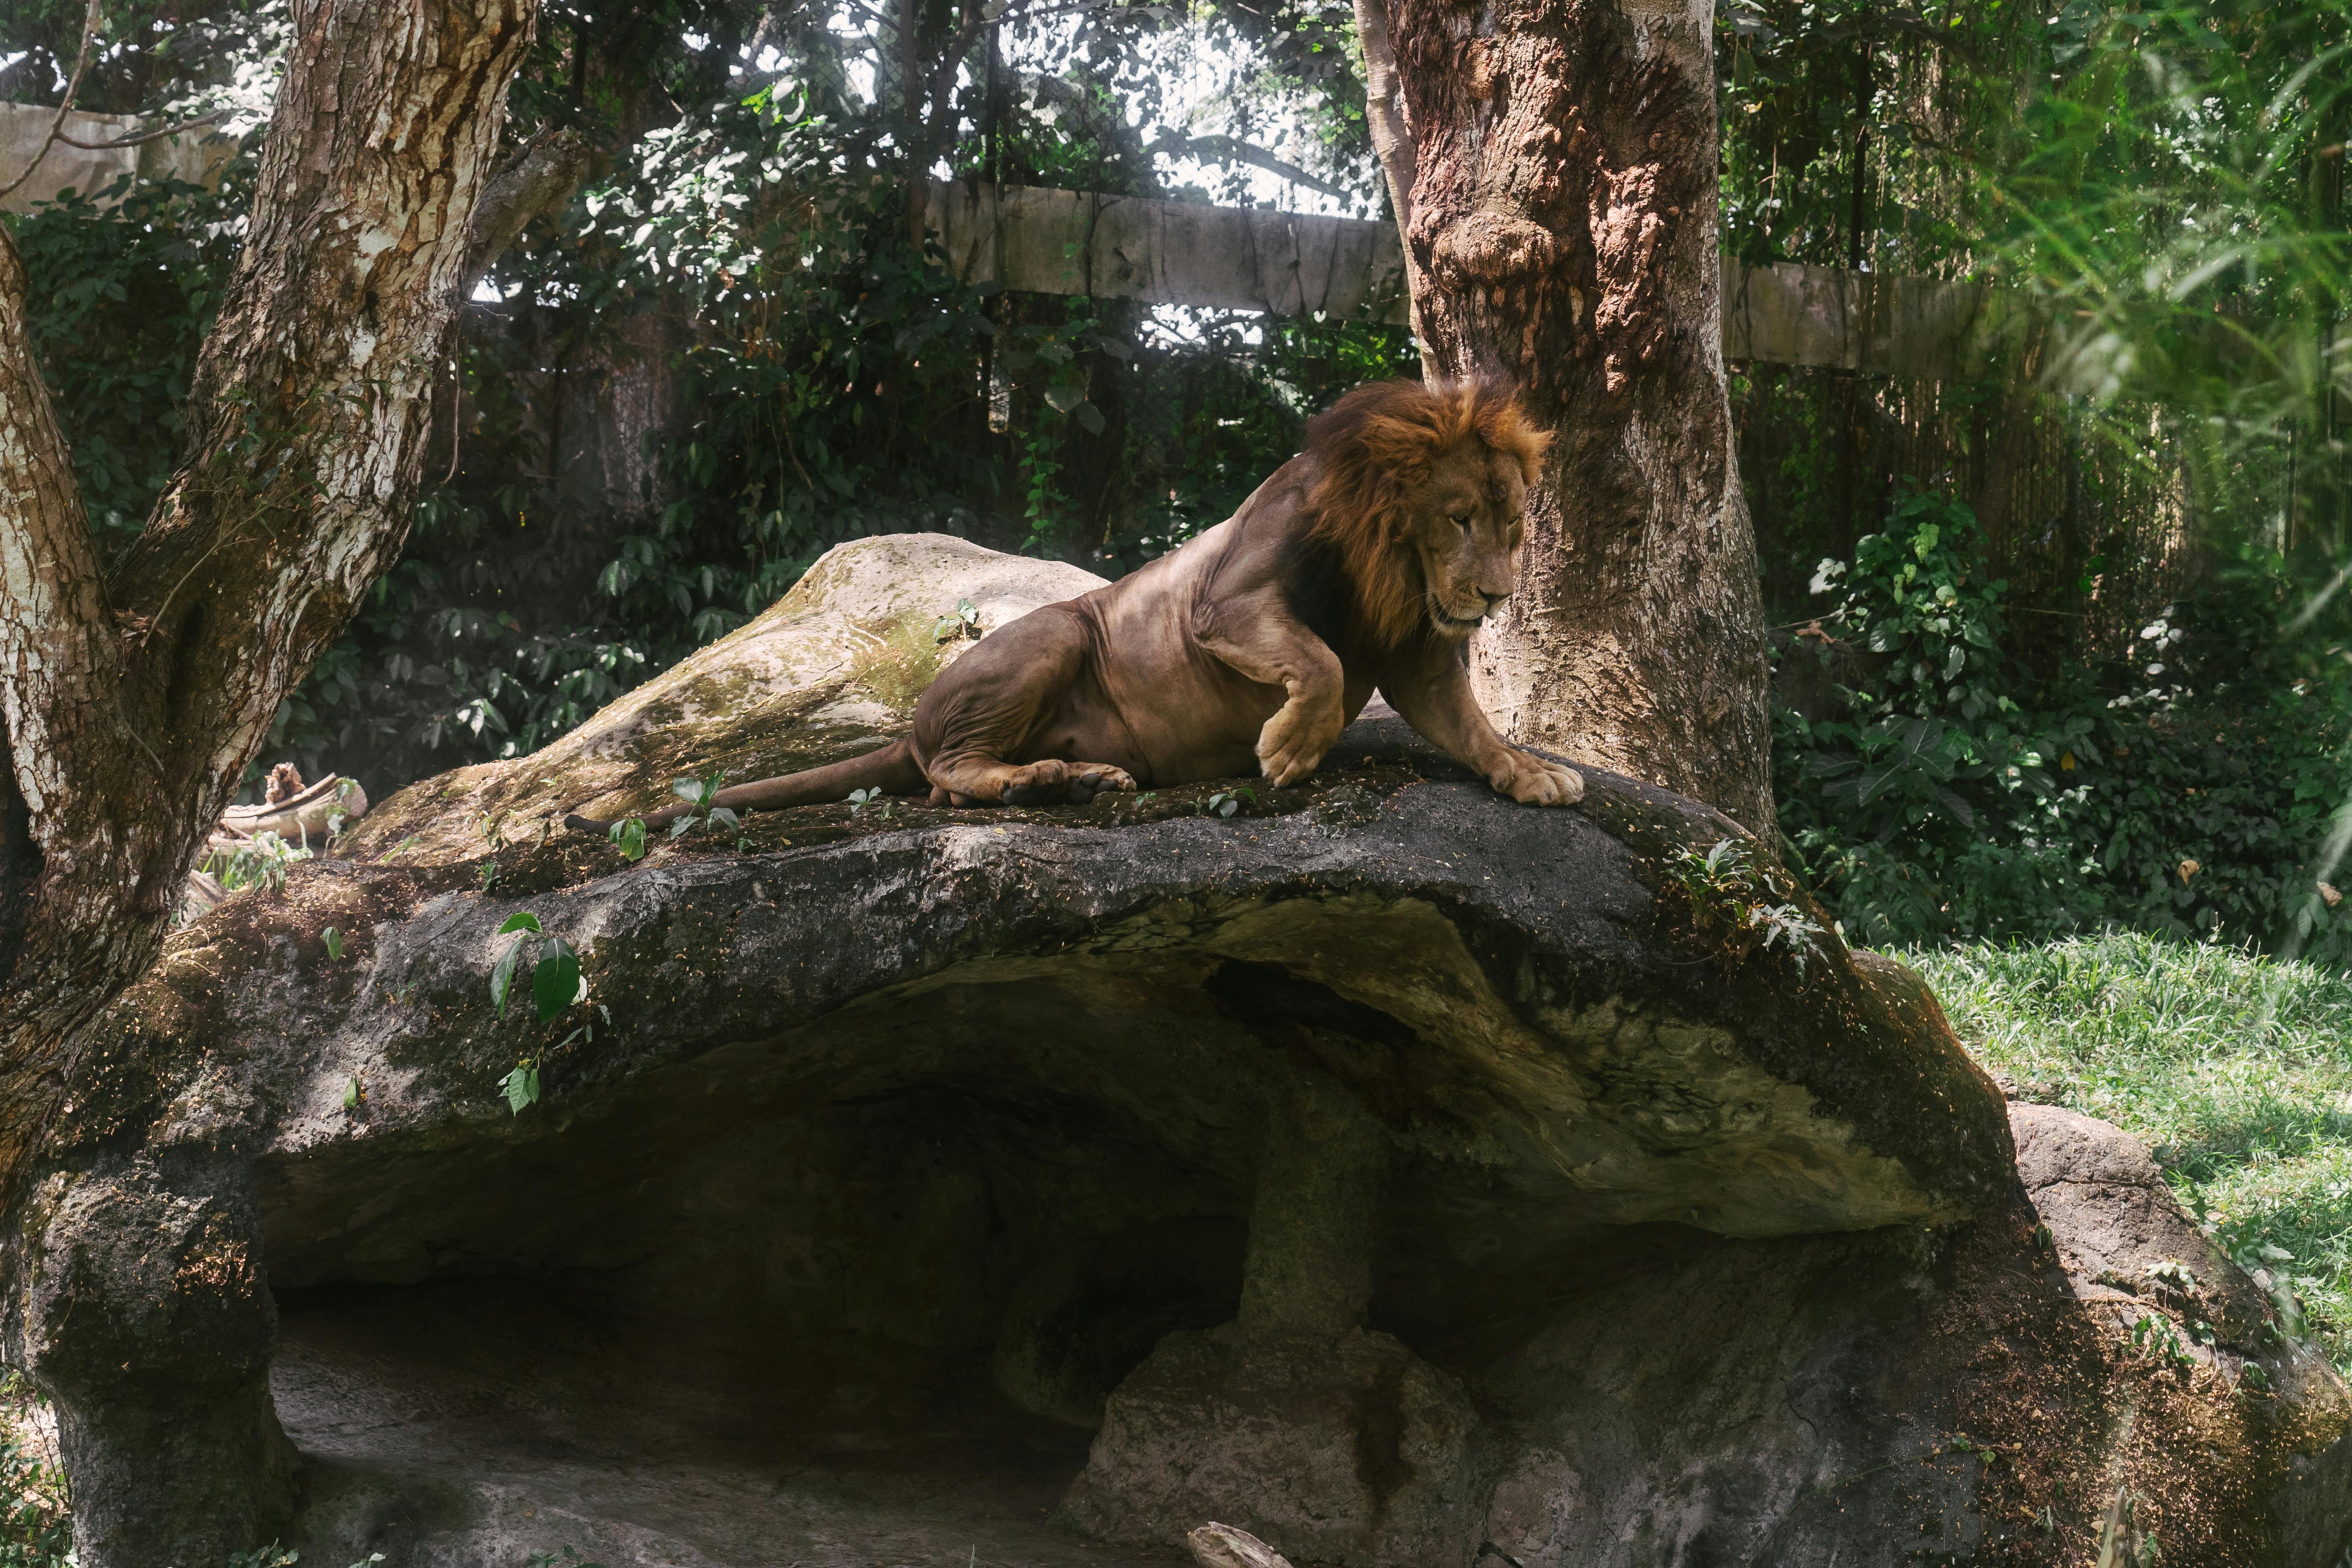 2,000+ Best Lion Photos · 100% Free Download · Pexels Stock Photos